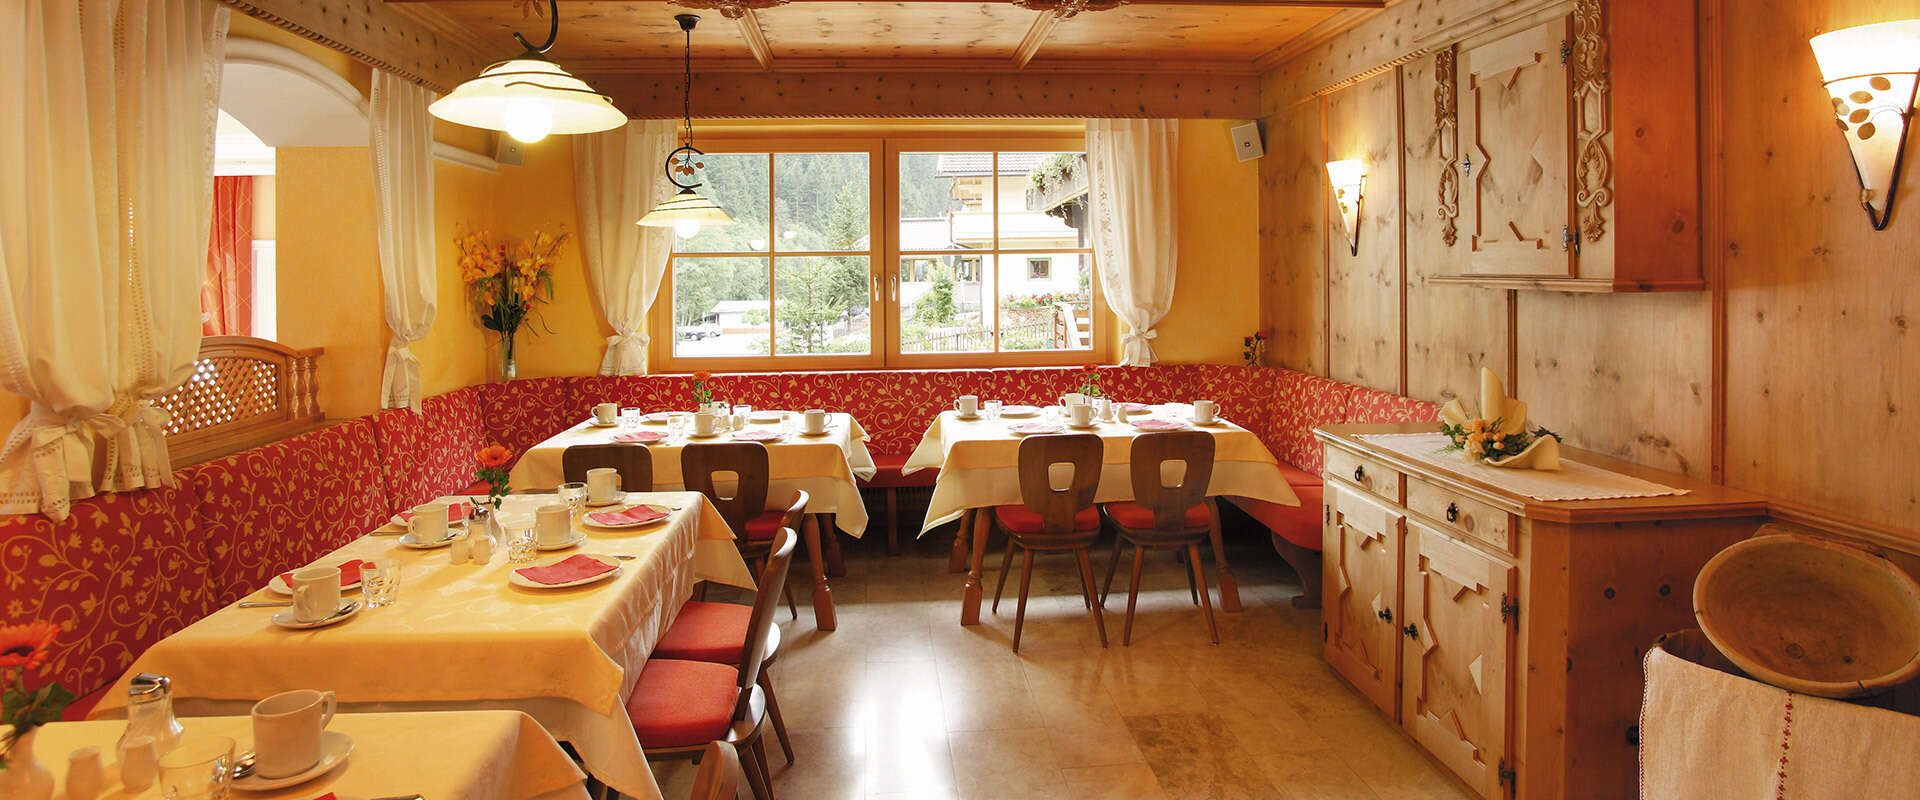 Tyrolean parlor in the Alpenherz Hotel